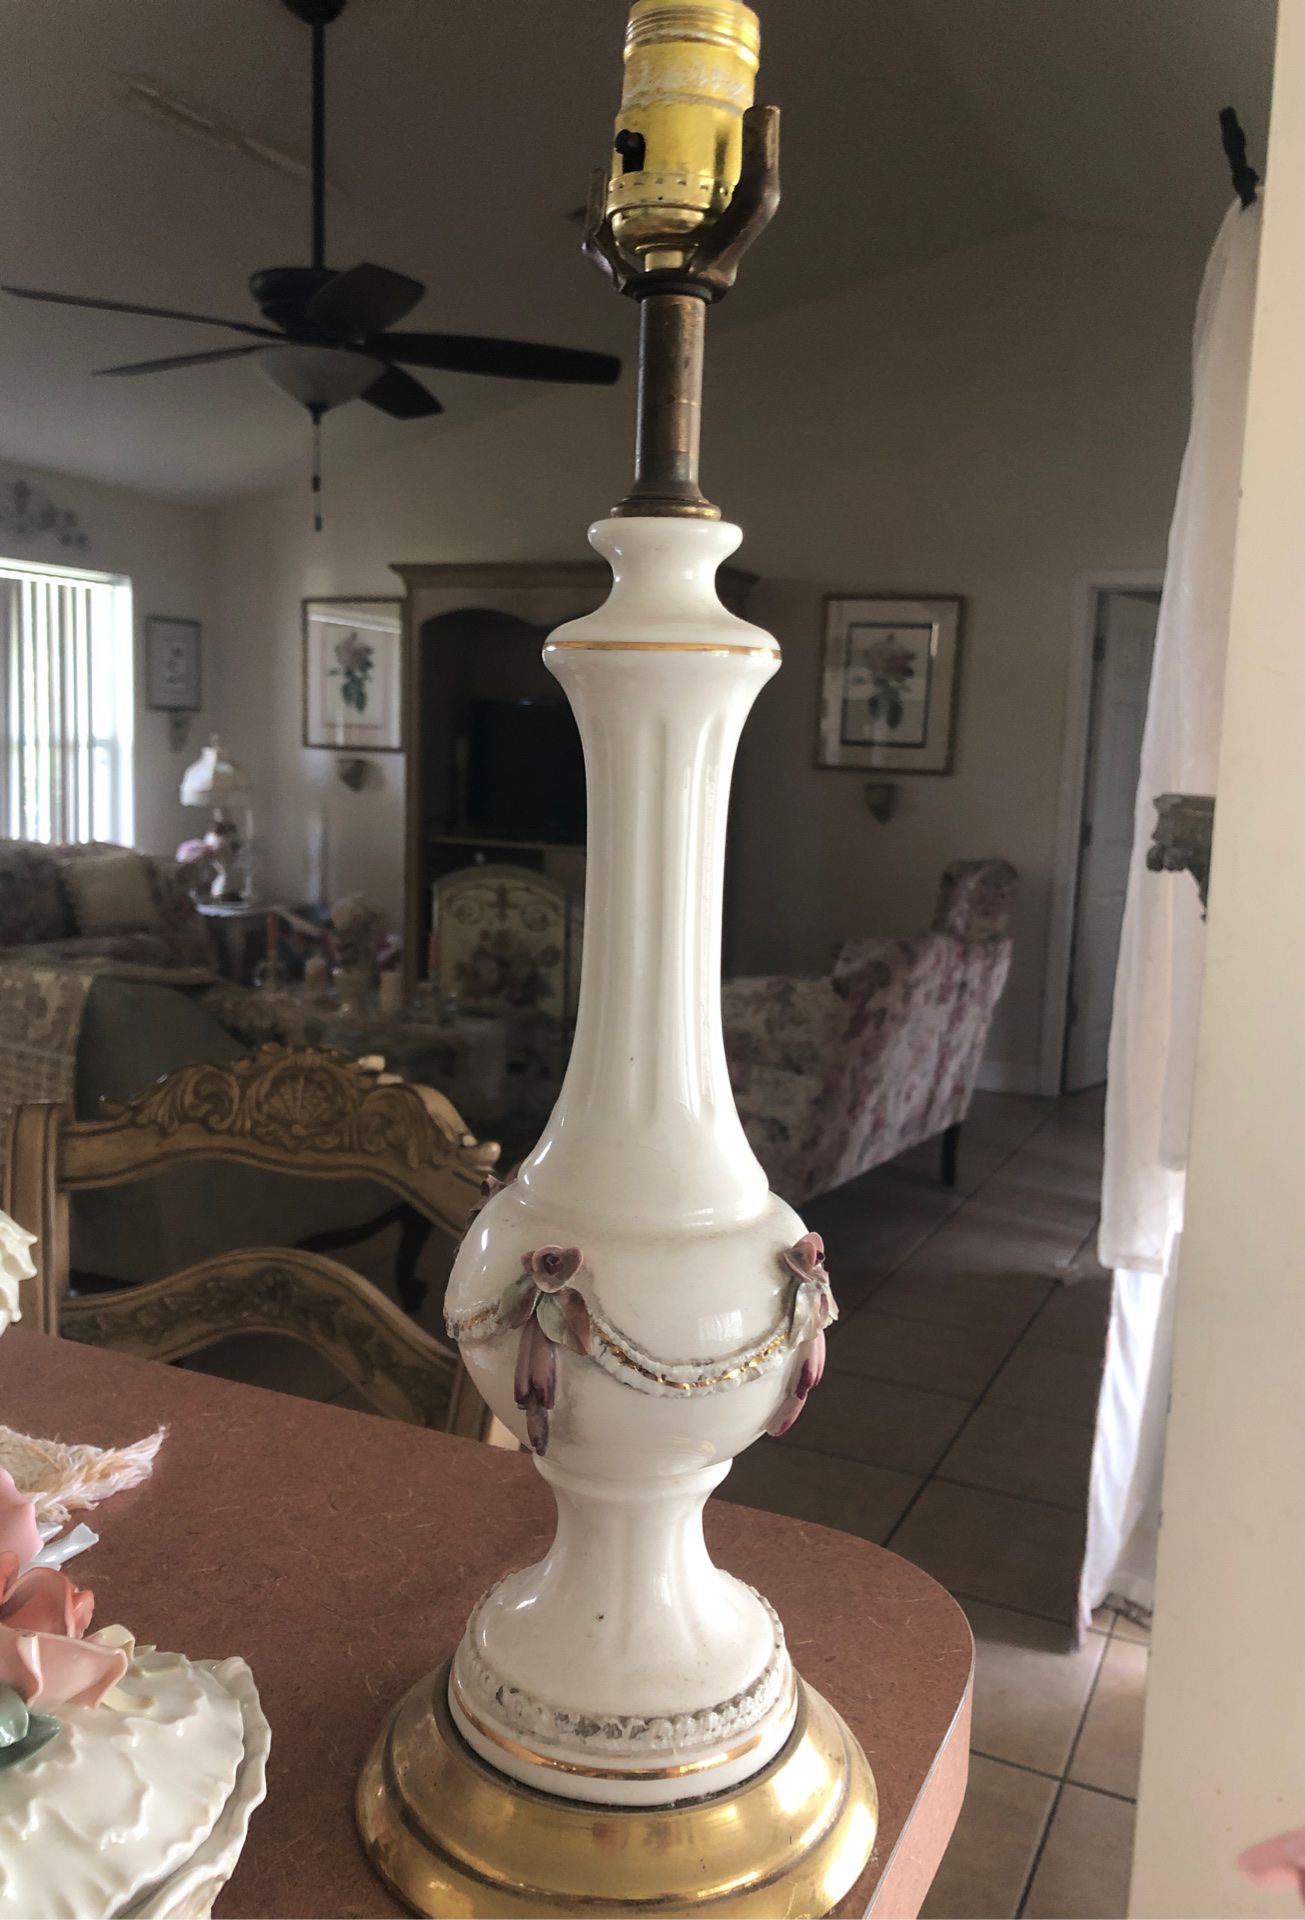 Small antique rose lamp